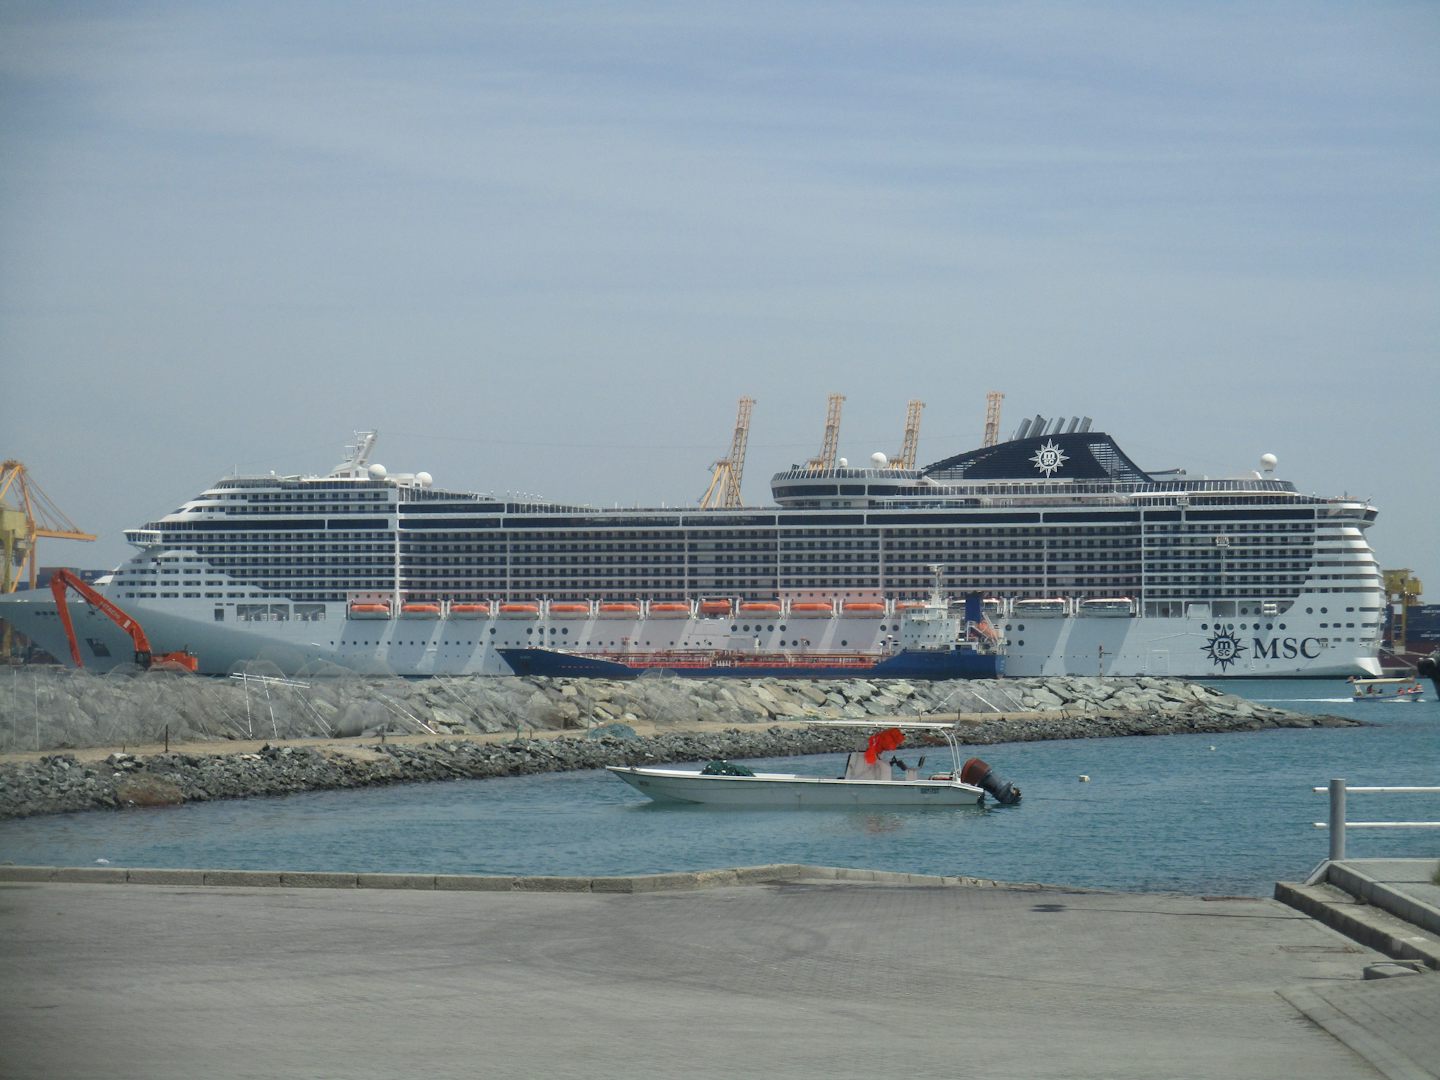 Ship docked in Dubai